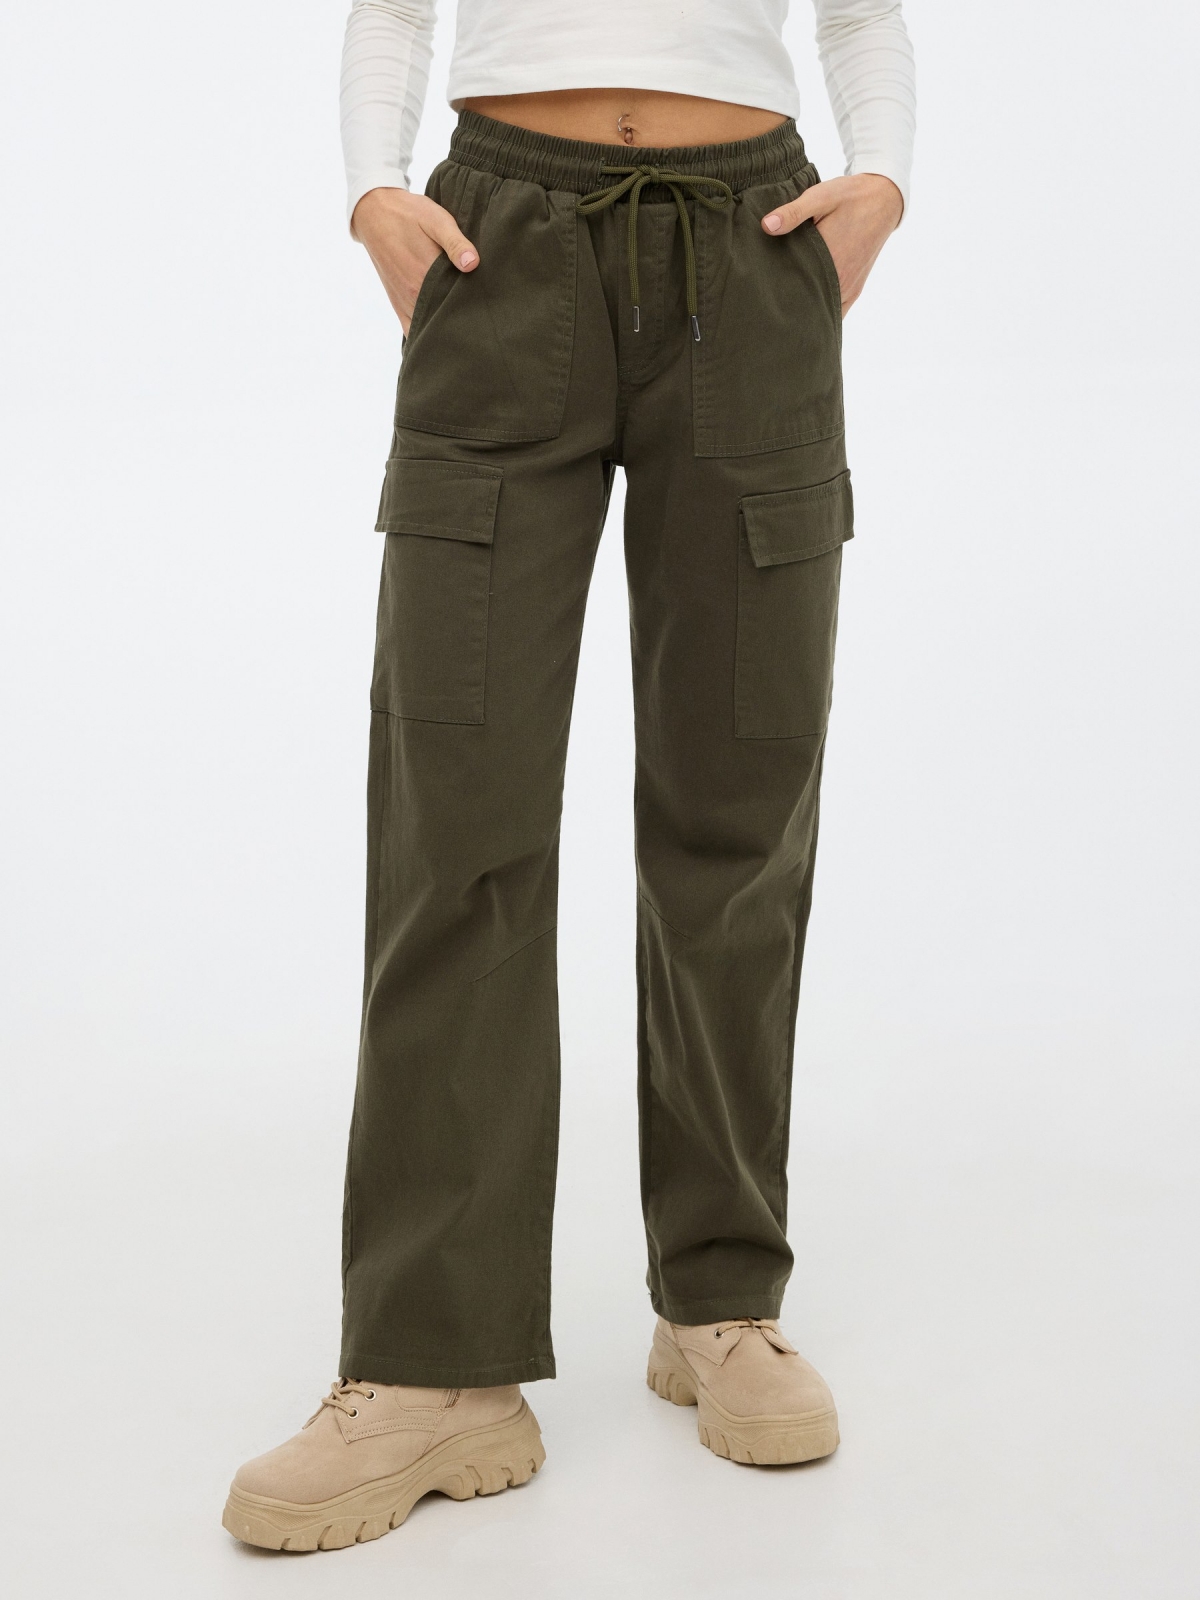 Cargo pants pockets khaki middle front view